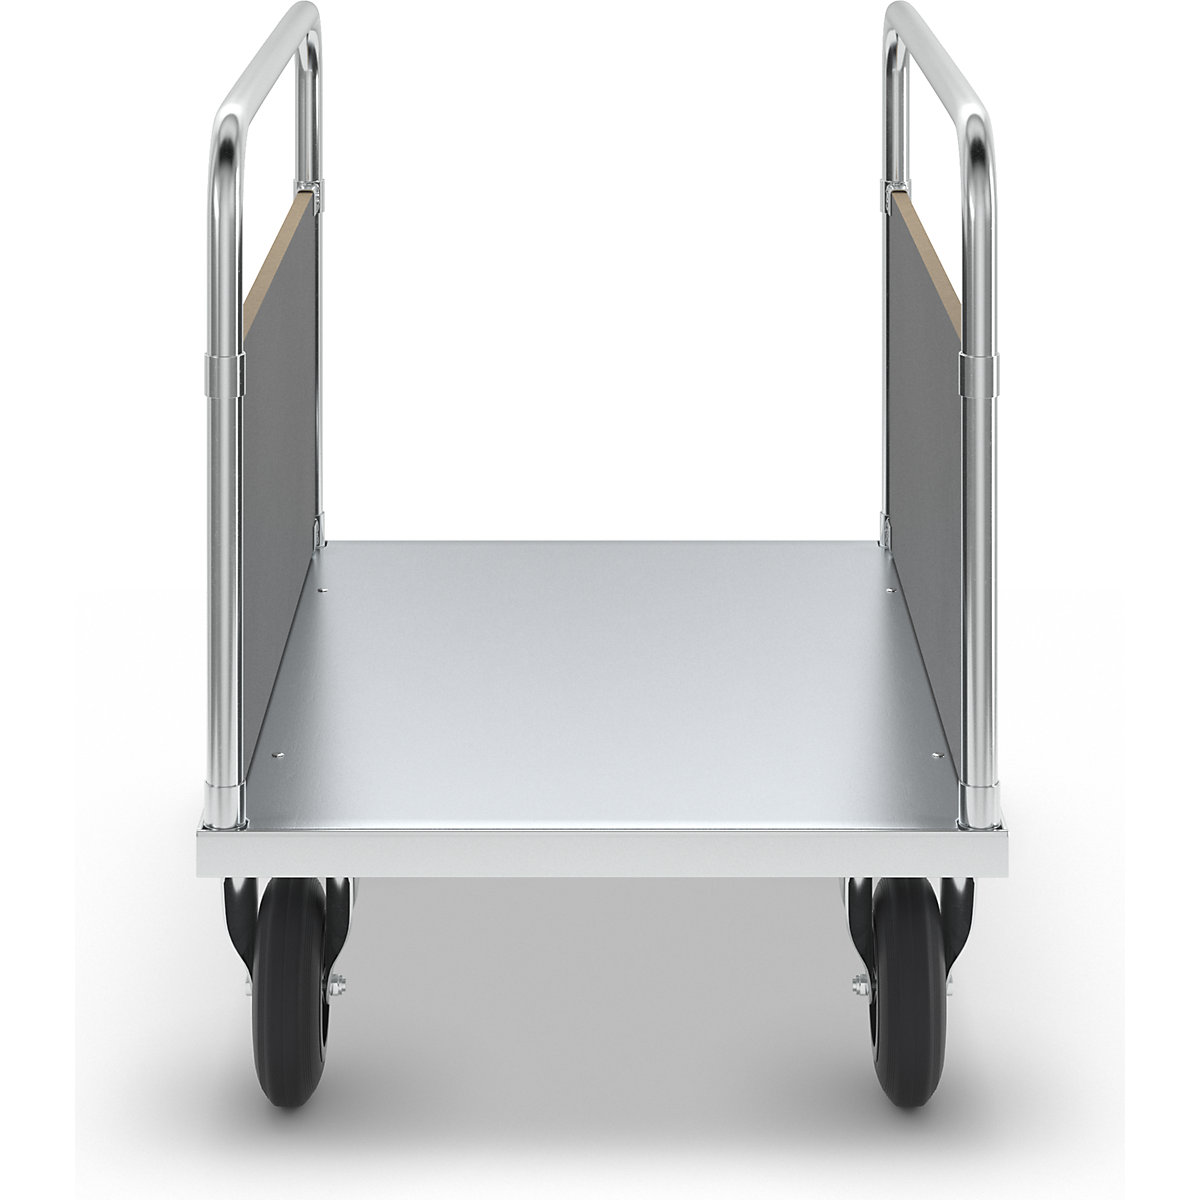 Carro de plataforma, carga máx. 500 kg – Kongamek (Imagen del producto 4)-3